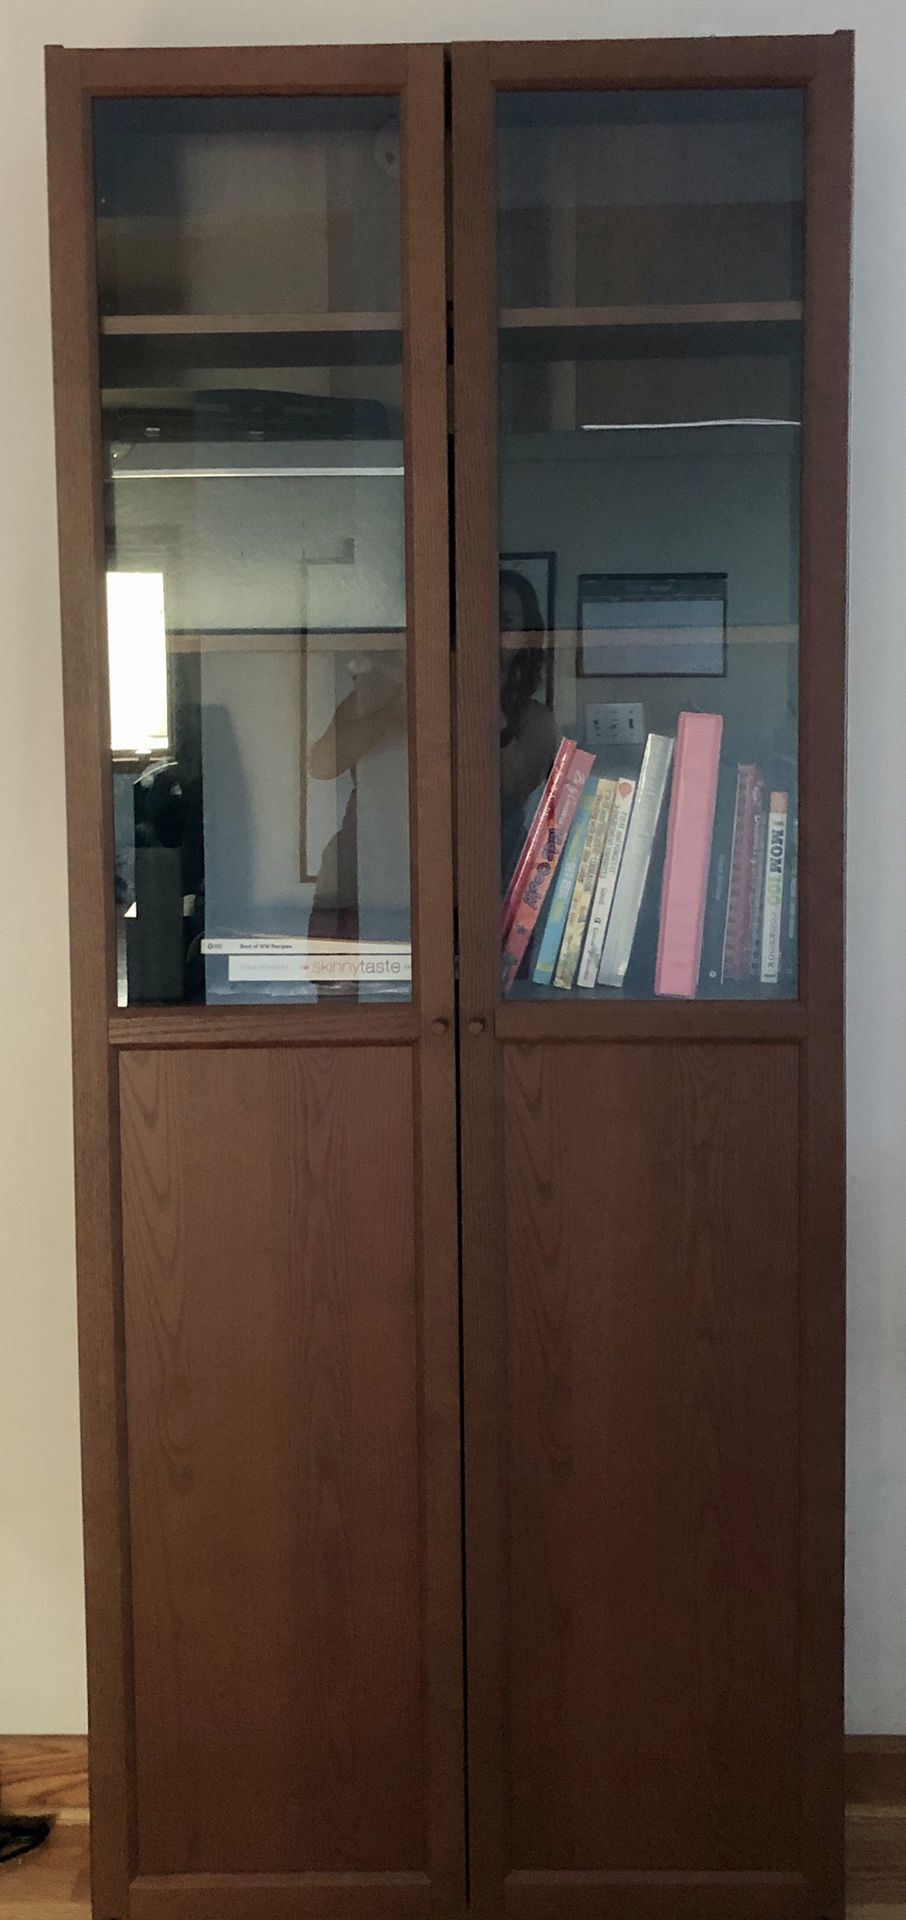 2 bookshelves/ display case